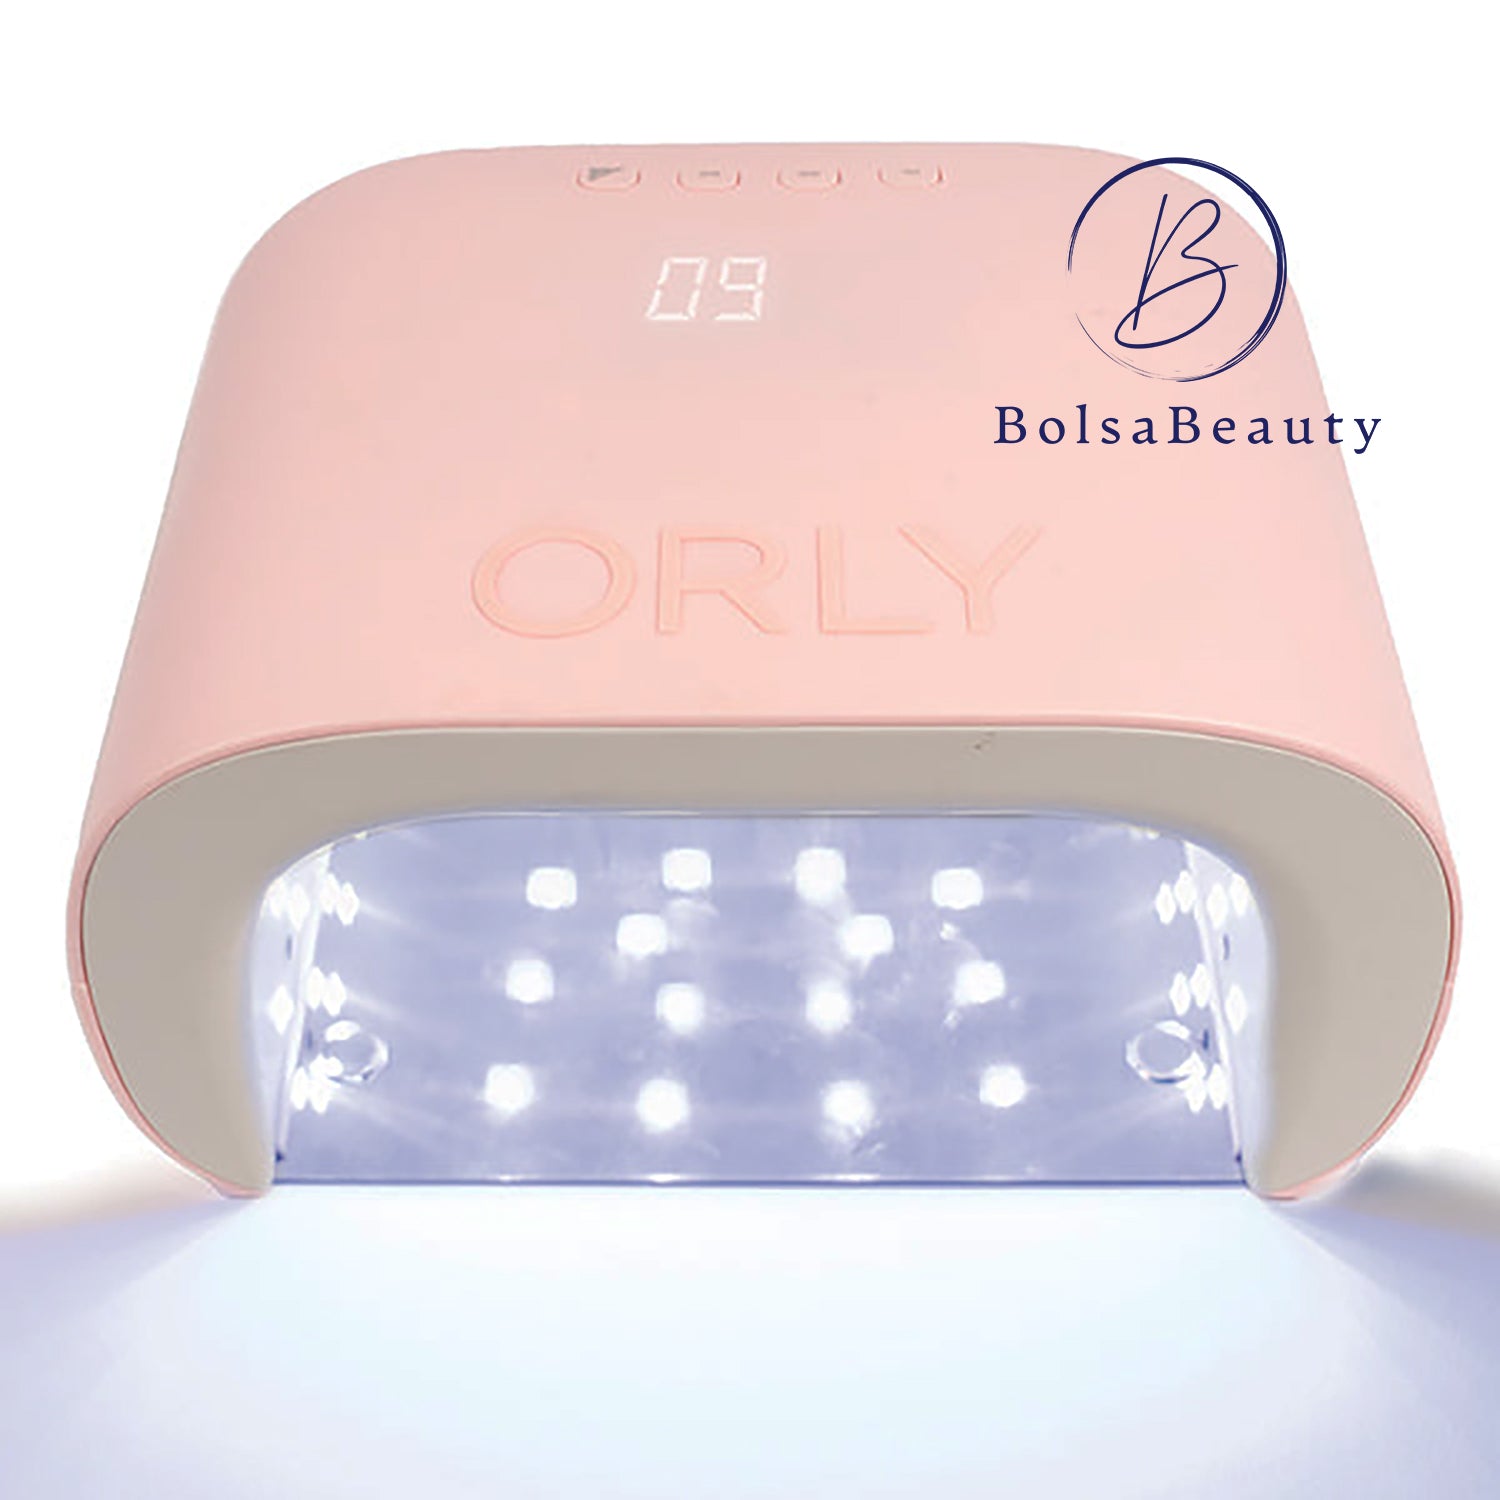 Orly - Lámpara inalámbrica LED 900 FX - Rosa, Verde azulado, Blanco (N –  BolsaBeauty Nail Supply